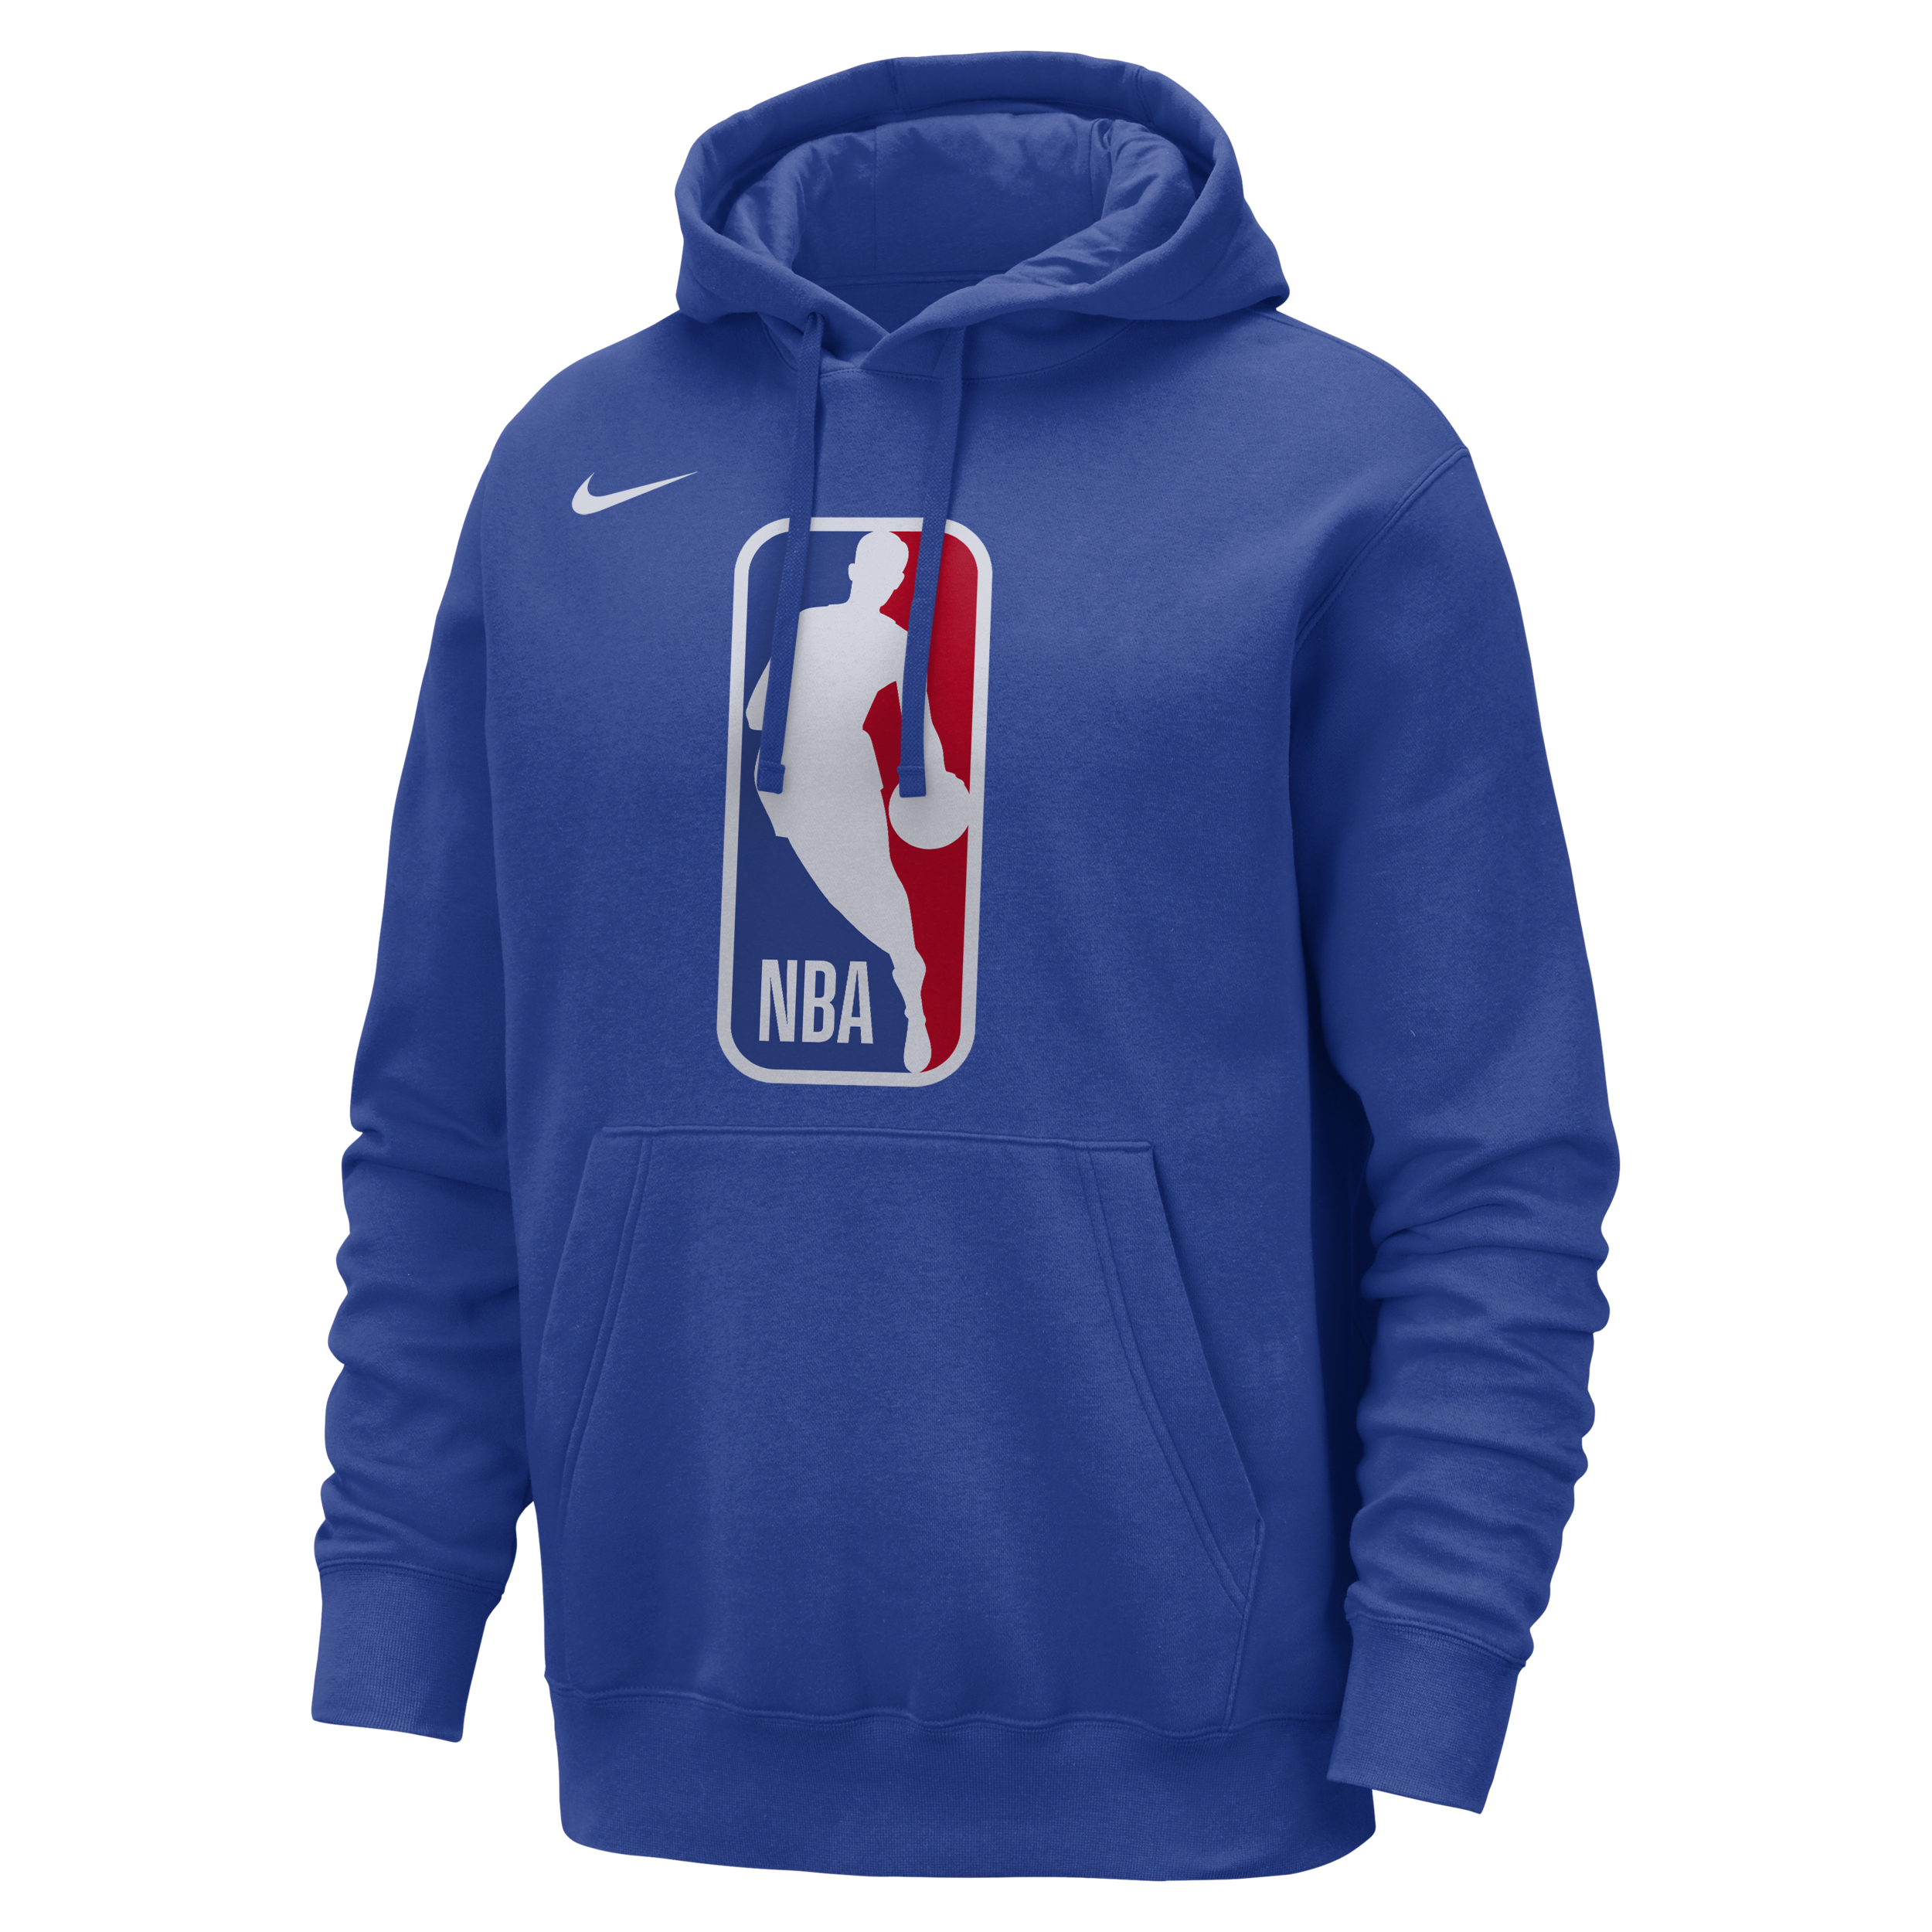 Blusão Nike NBA Team 31 Club Masculino